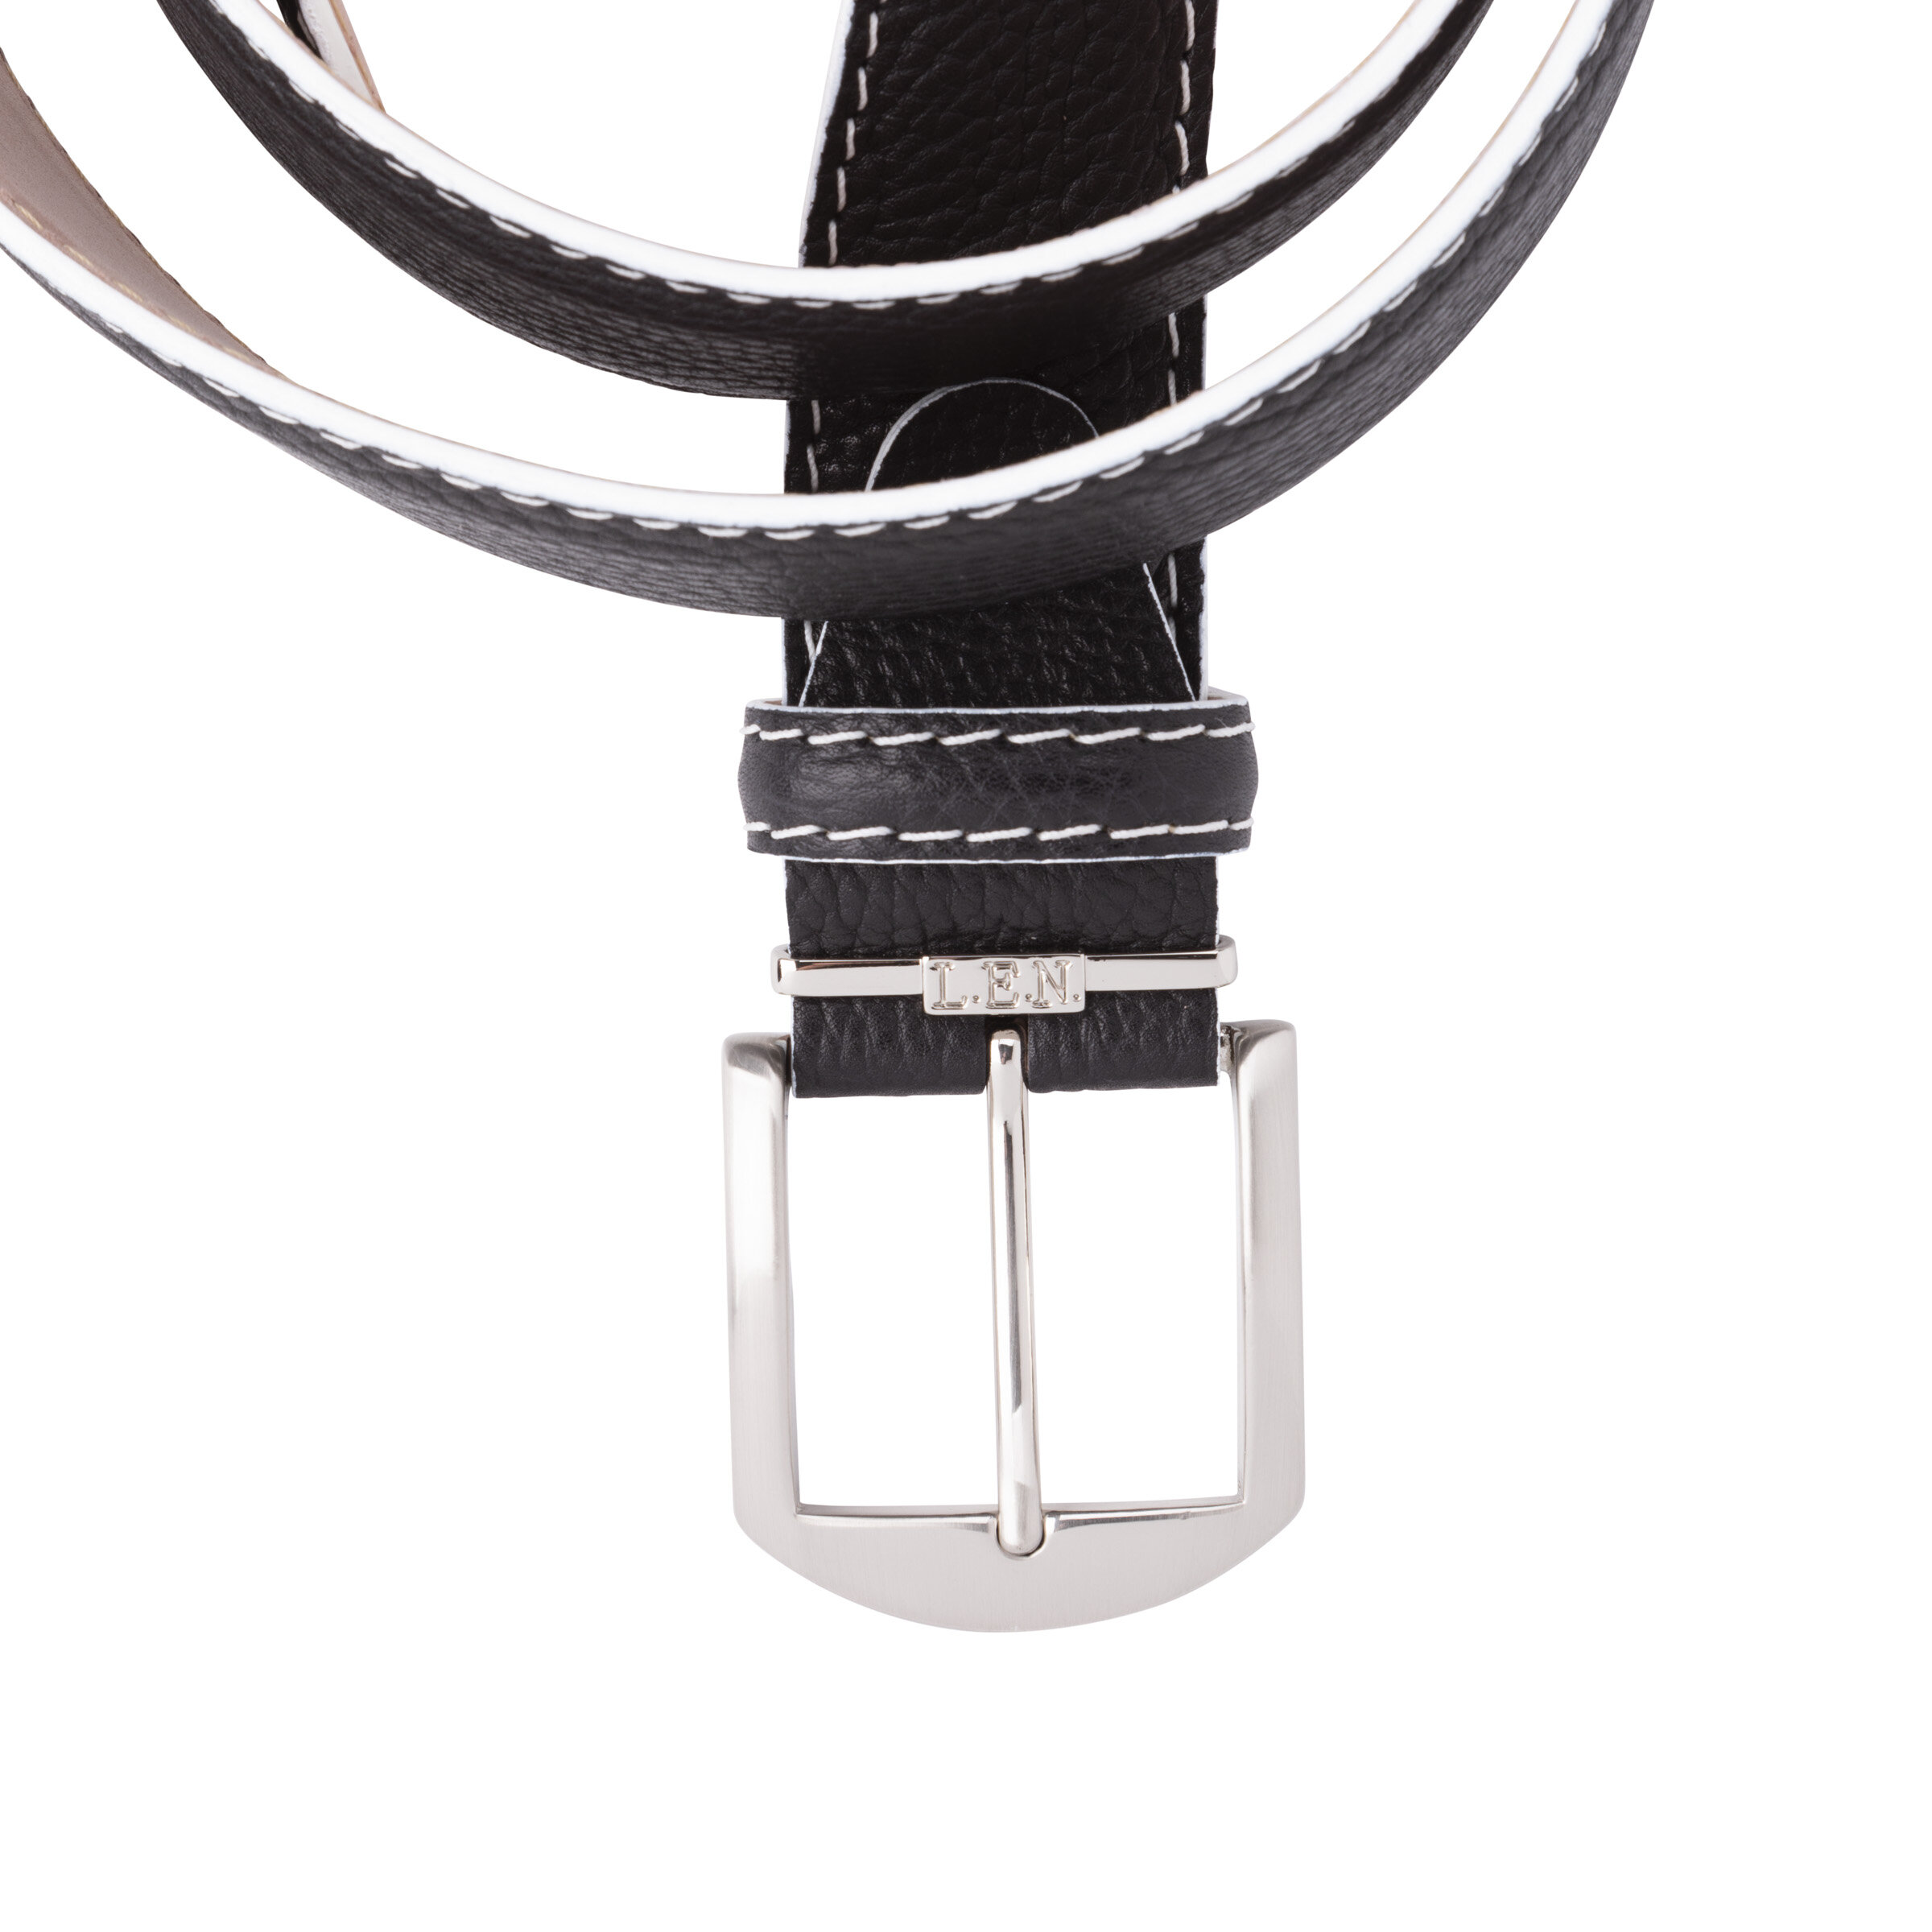 Black Pebbled Leather Belt, Signature Buckle (Shiny Silver